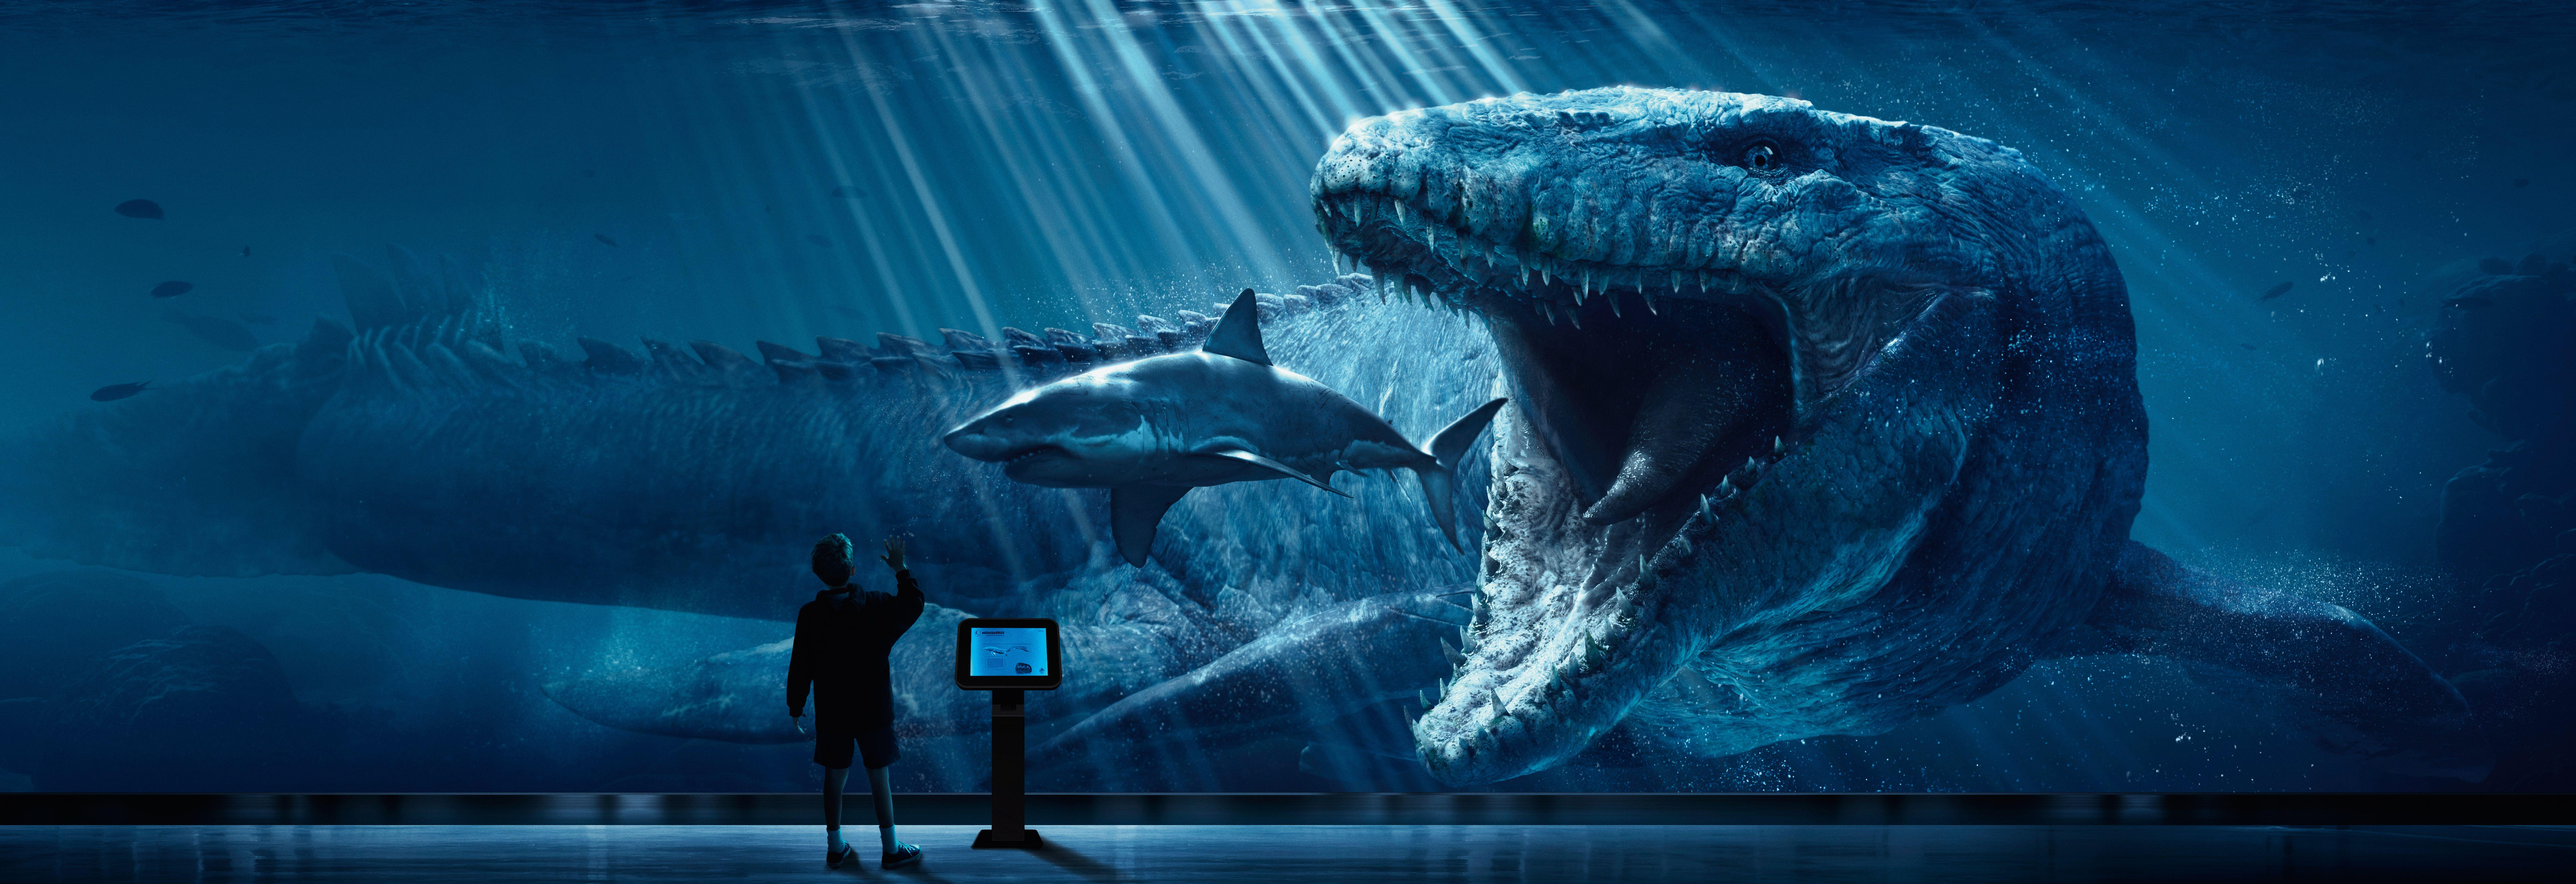 Wallpaper Jurassic World, Mosasaurus, Underwater, 4K, 8K, Movies